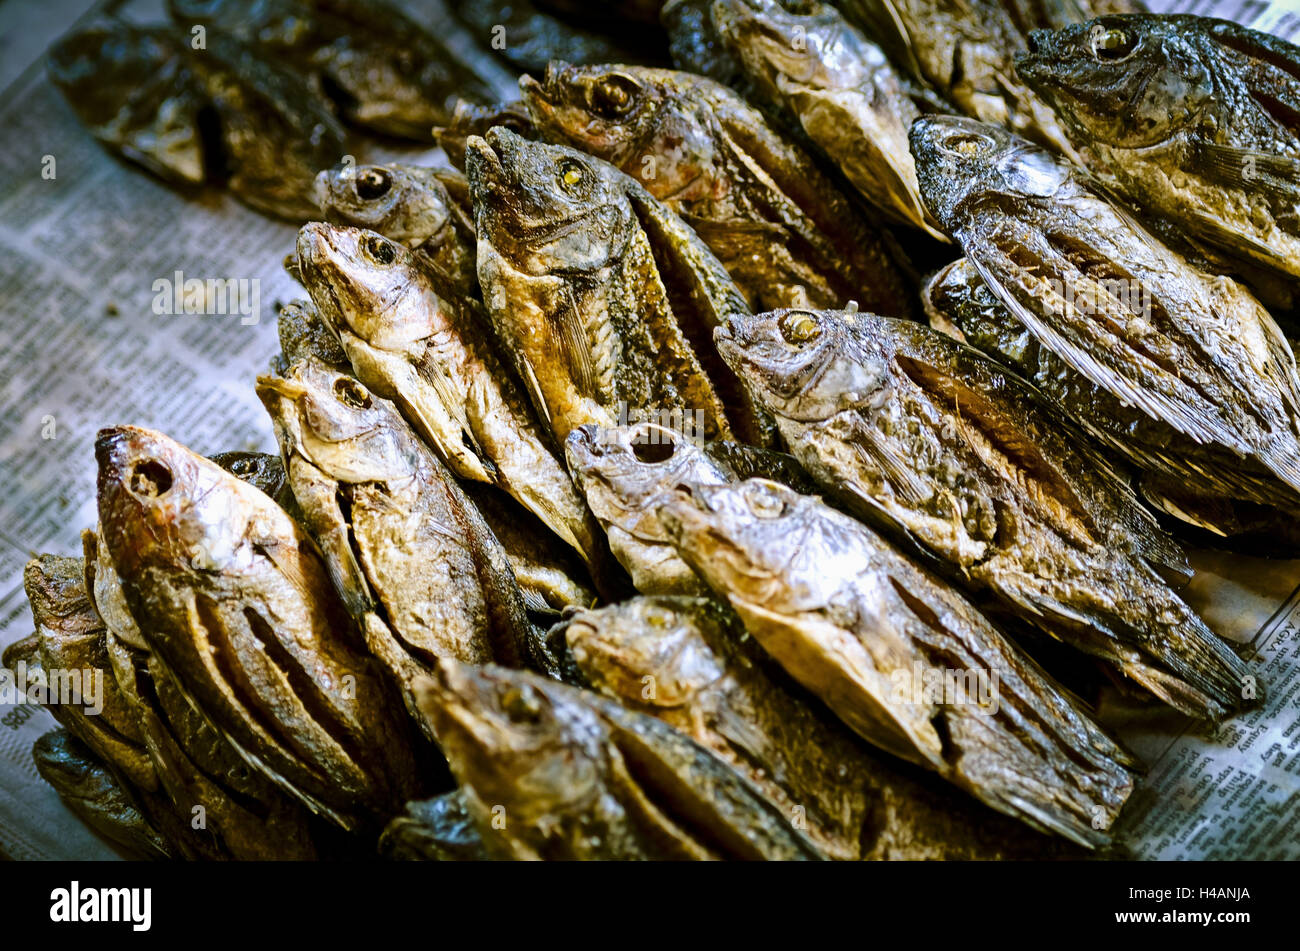 Africa, Tanzania, East Africa, Moshi, market, fish, dried fish, Stock Photo